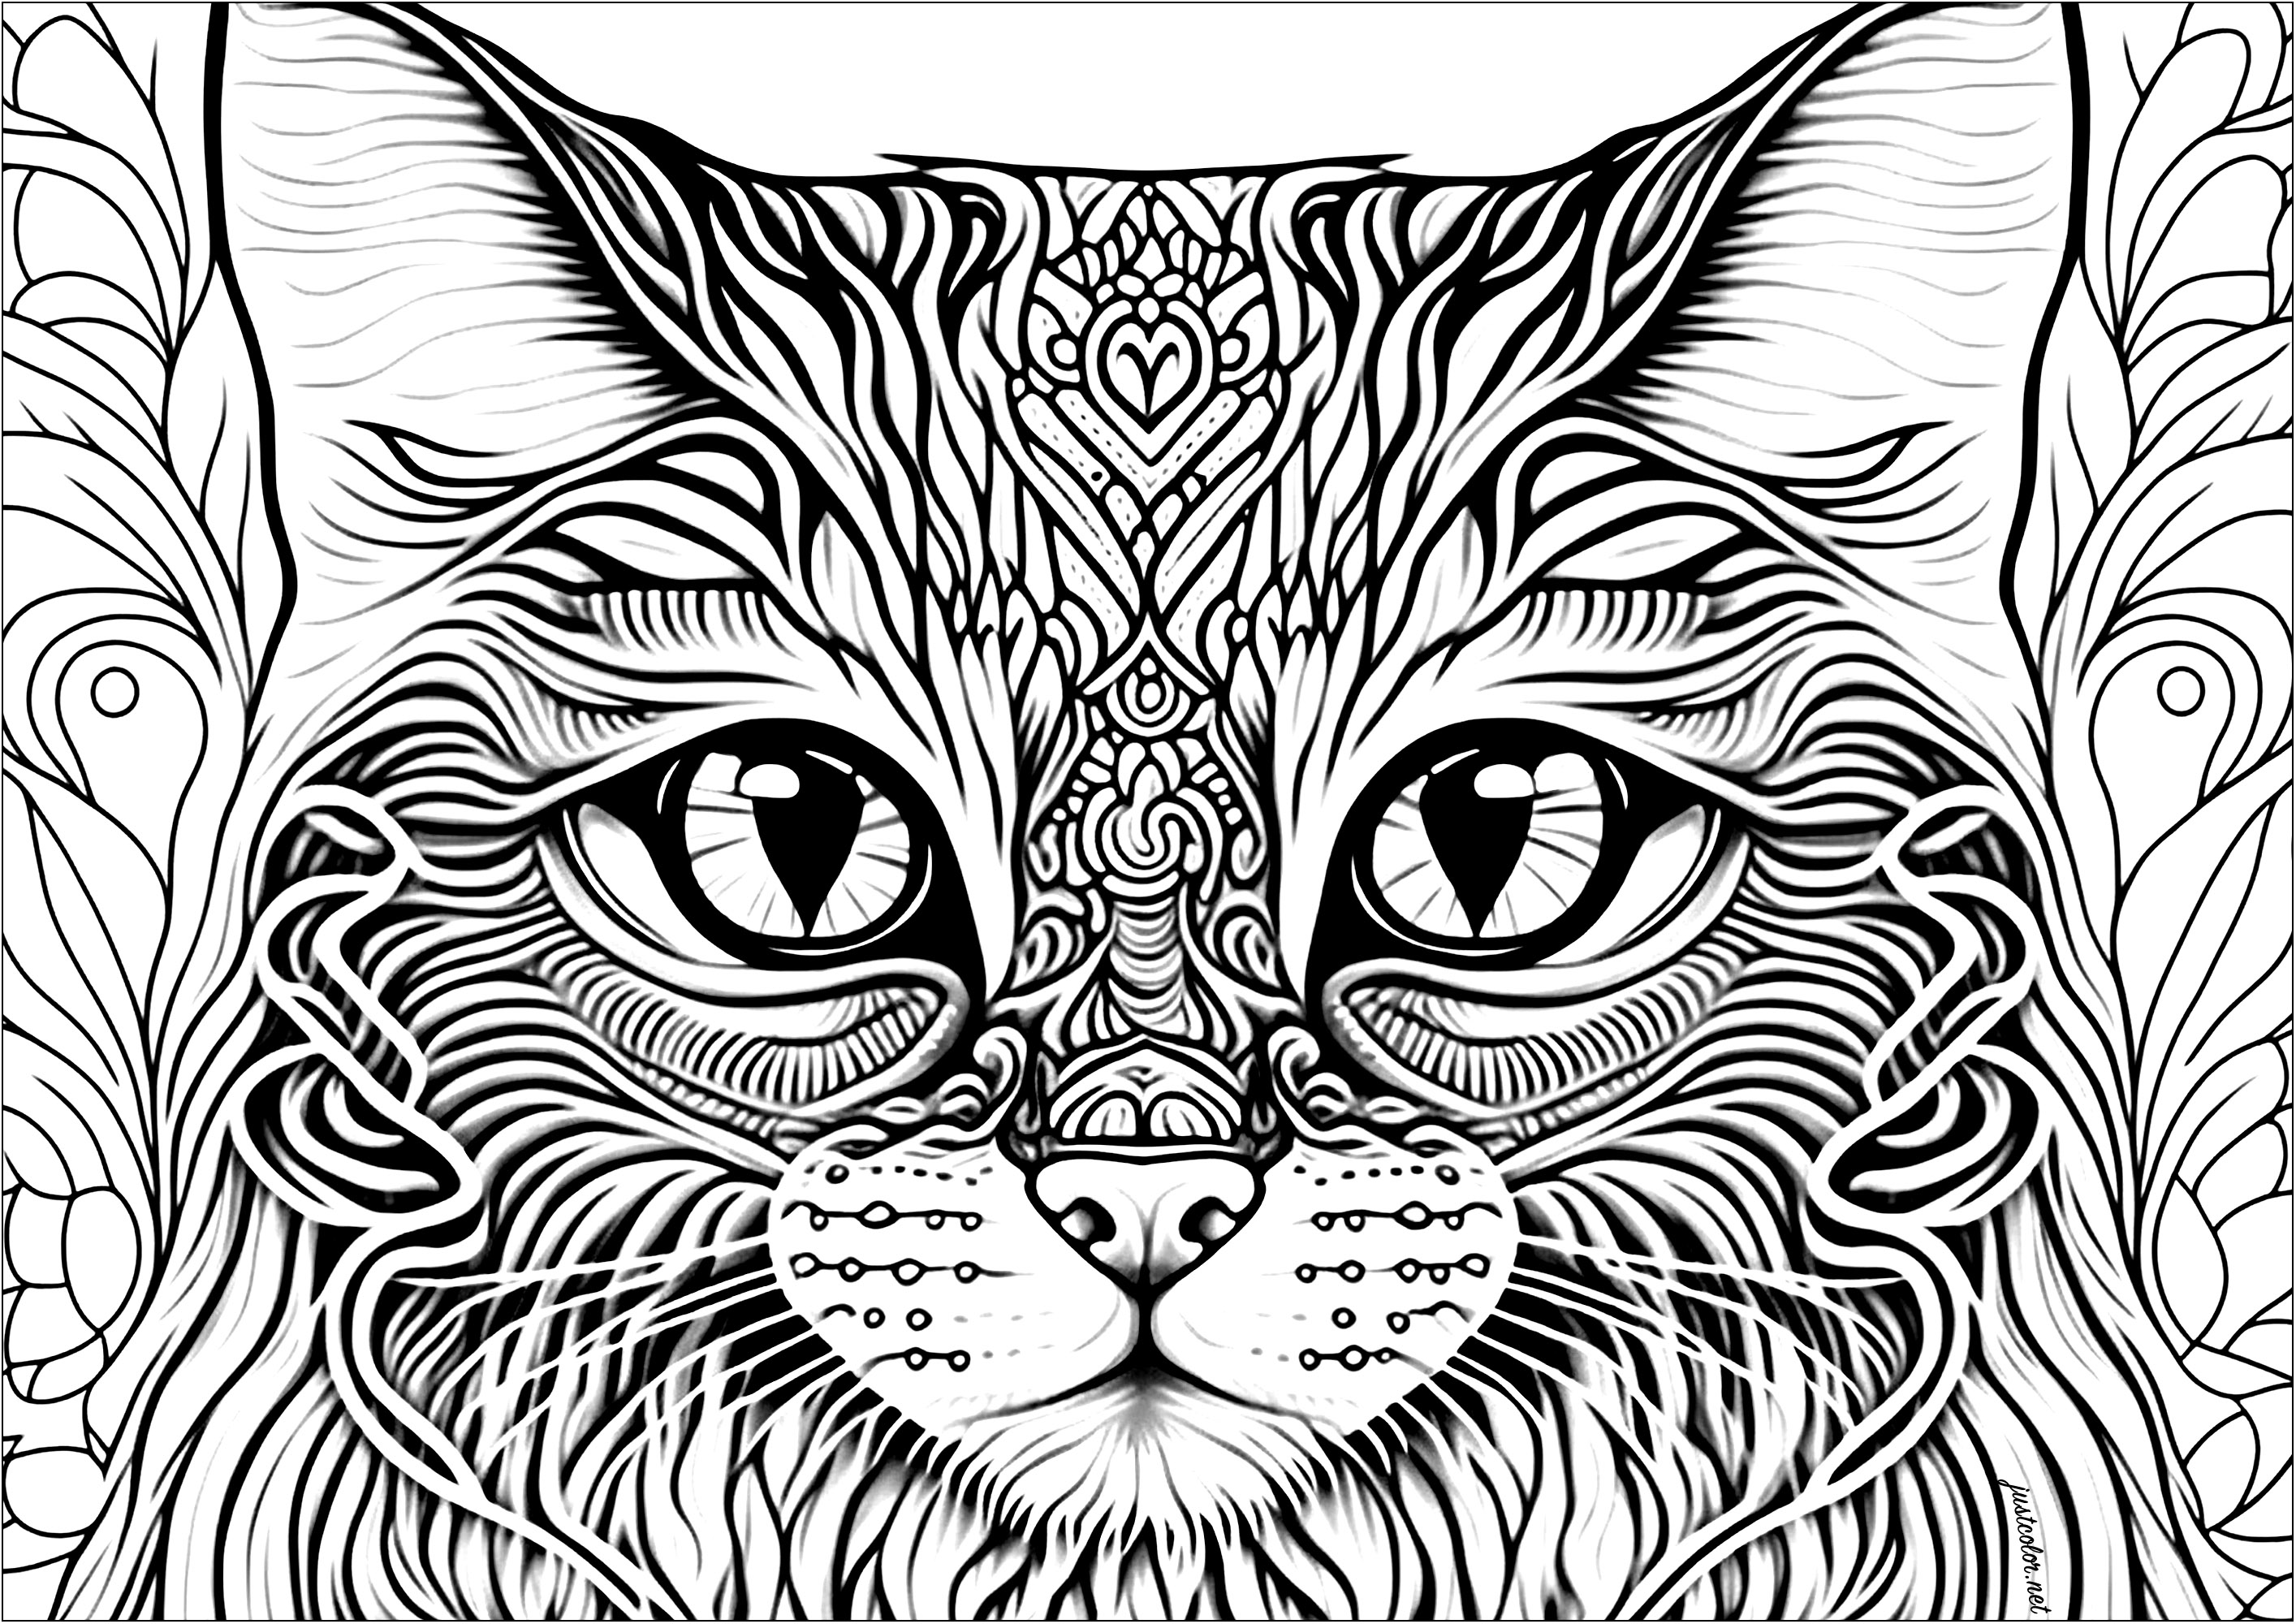 desenhos-colorir-gatos